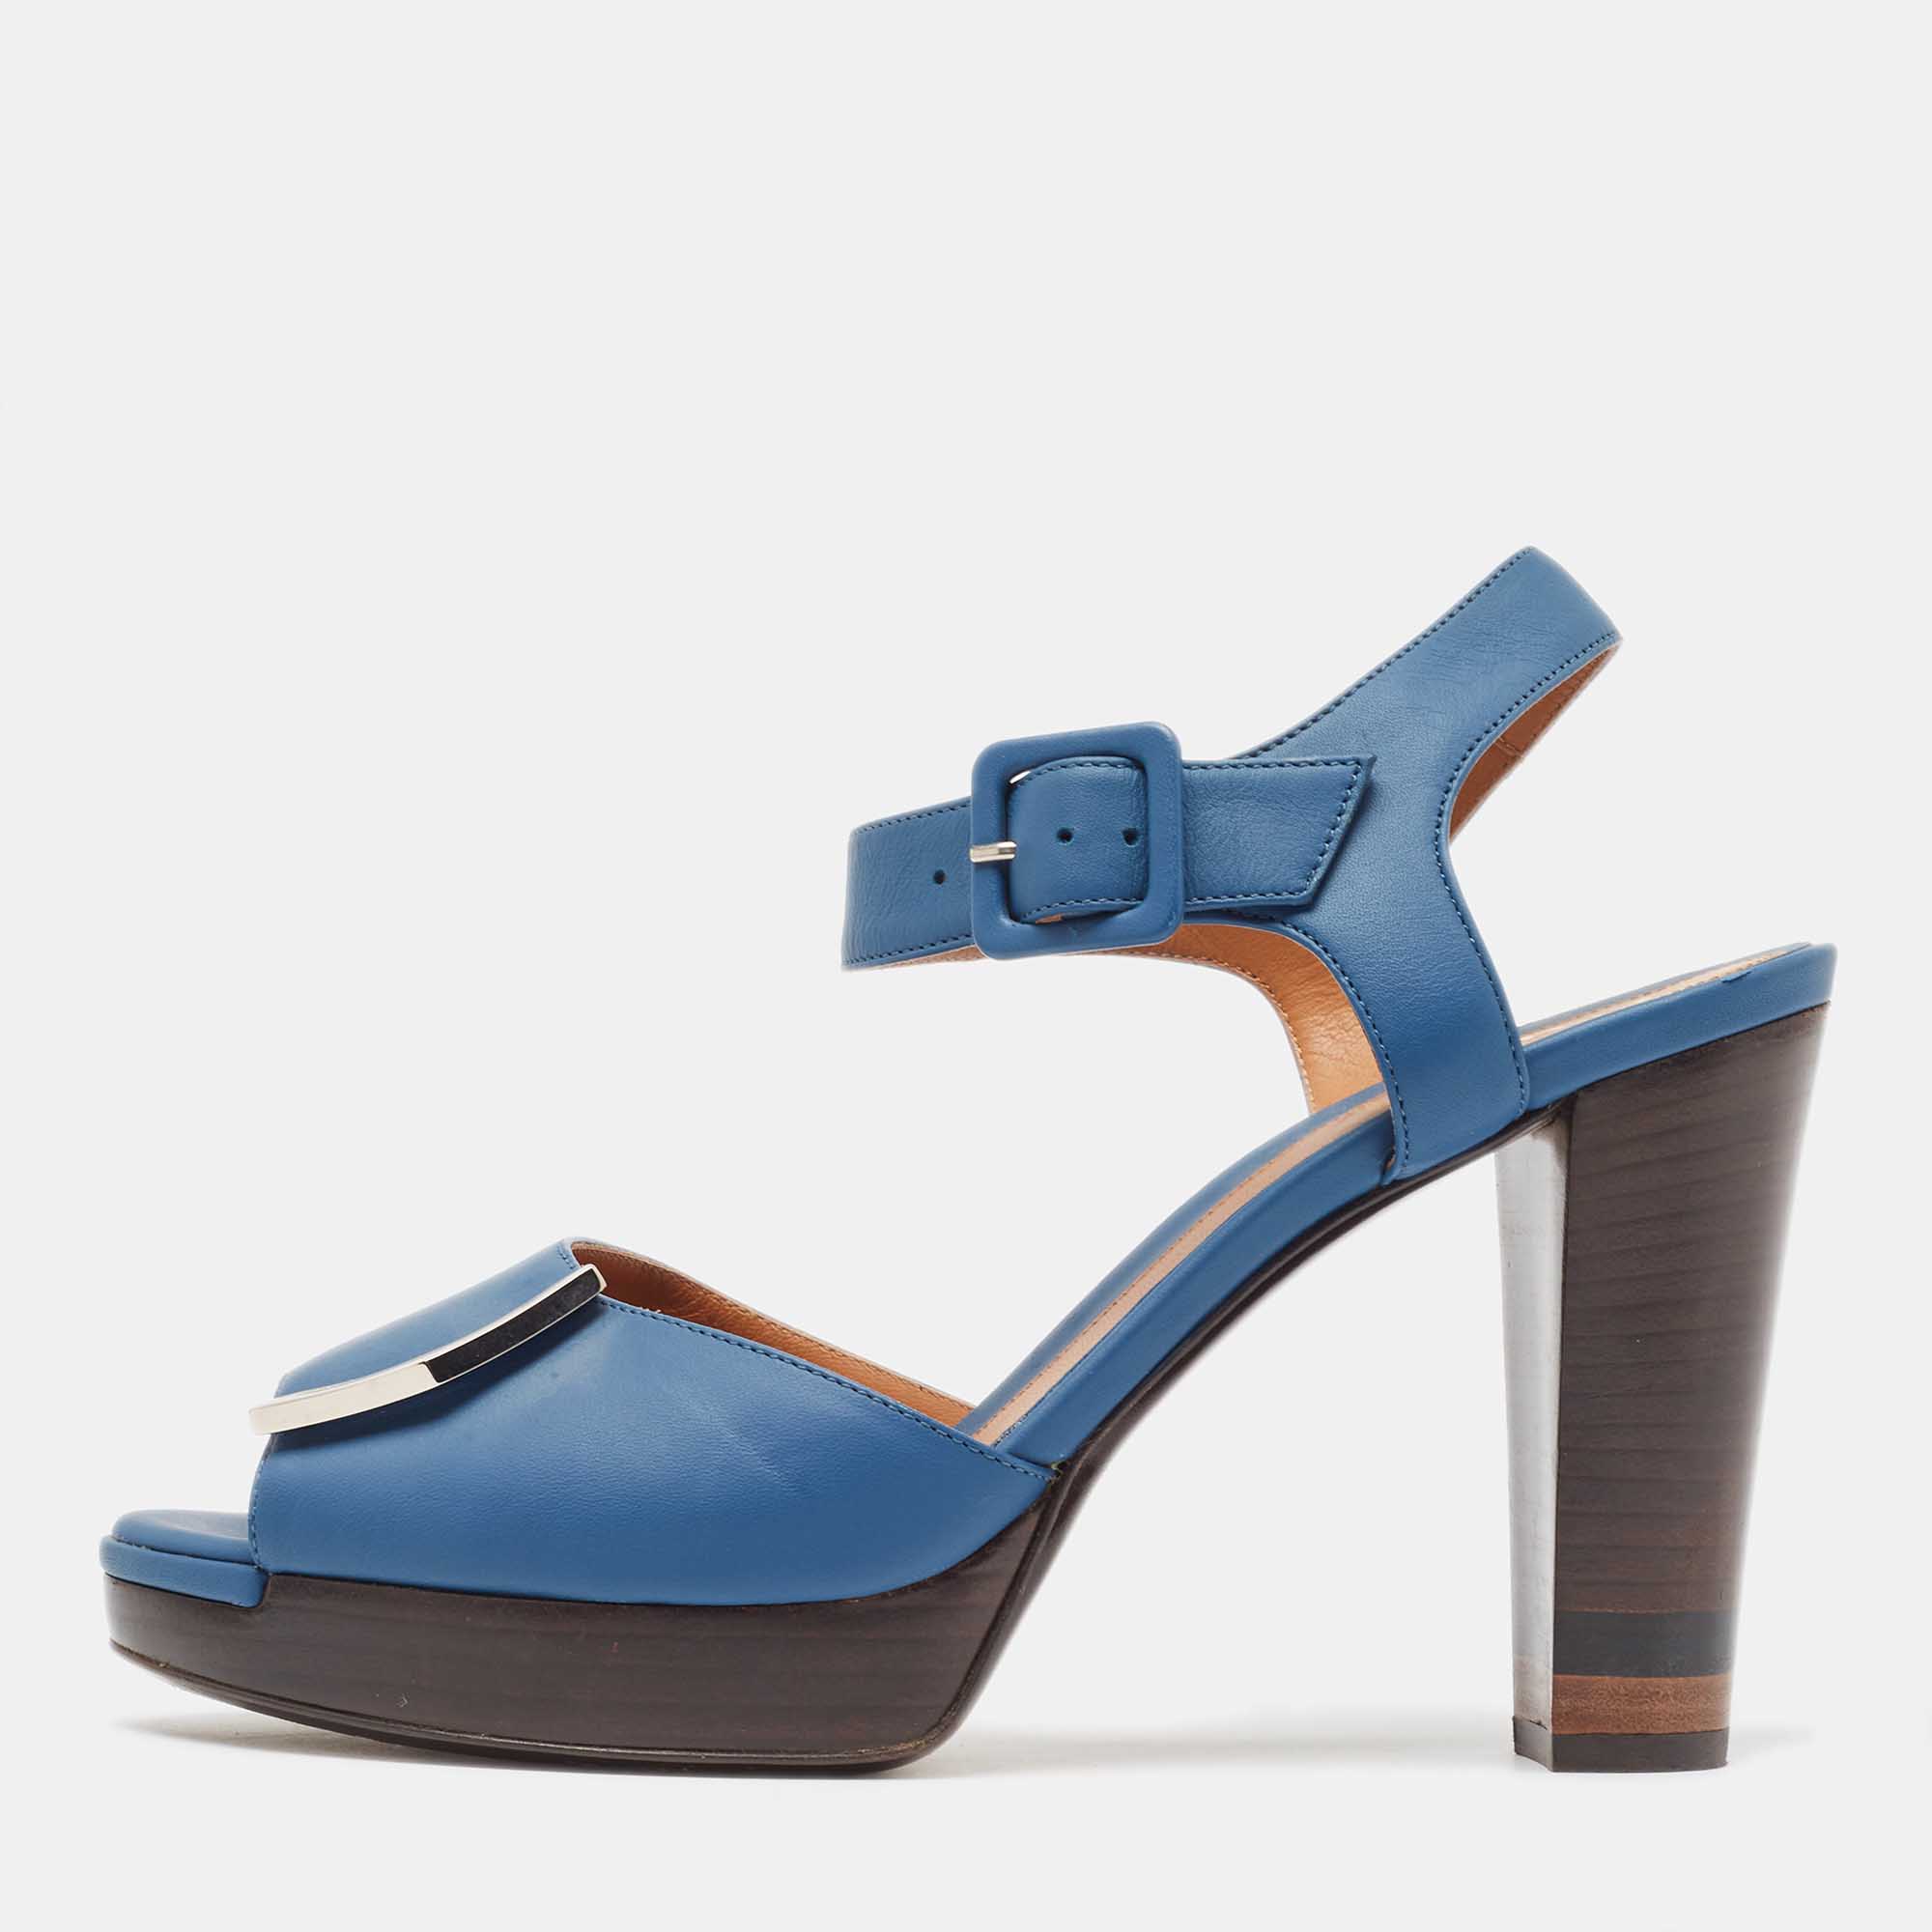 Fendi blue leather metal logo open-toe ankle-strap platform sandals size 39